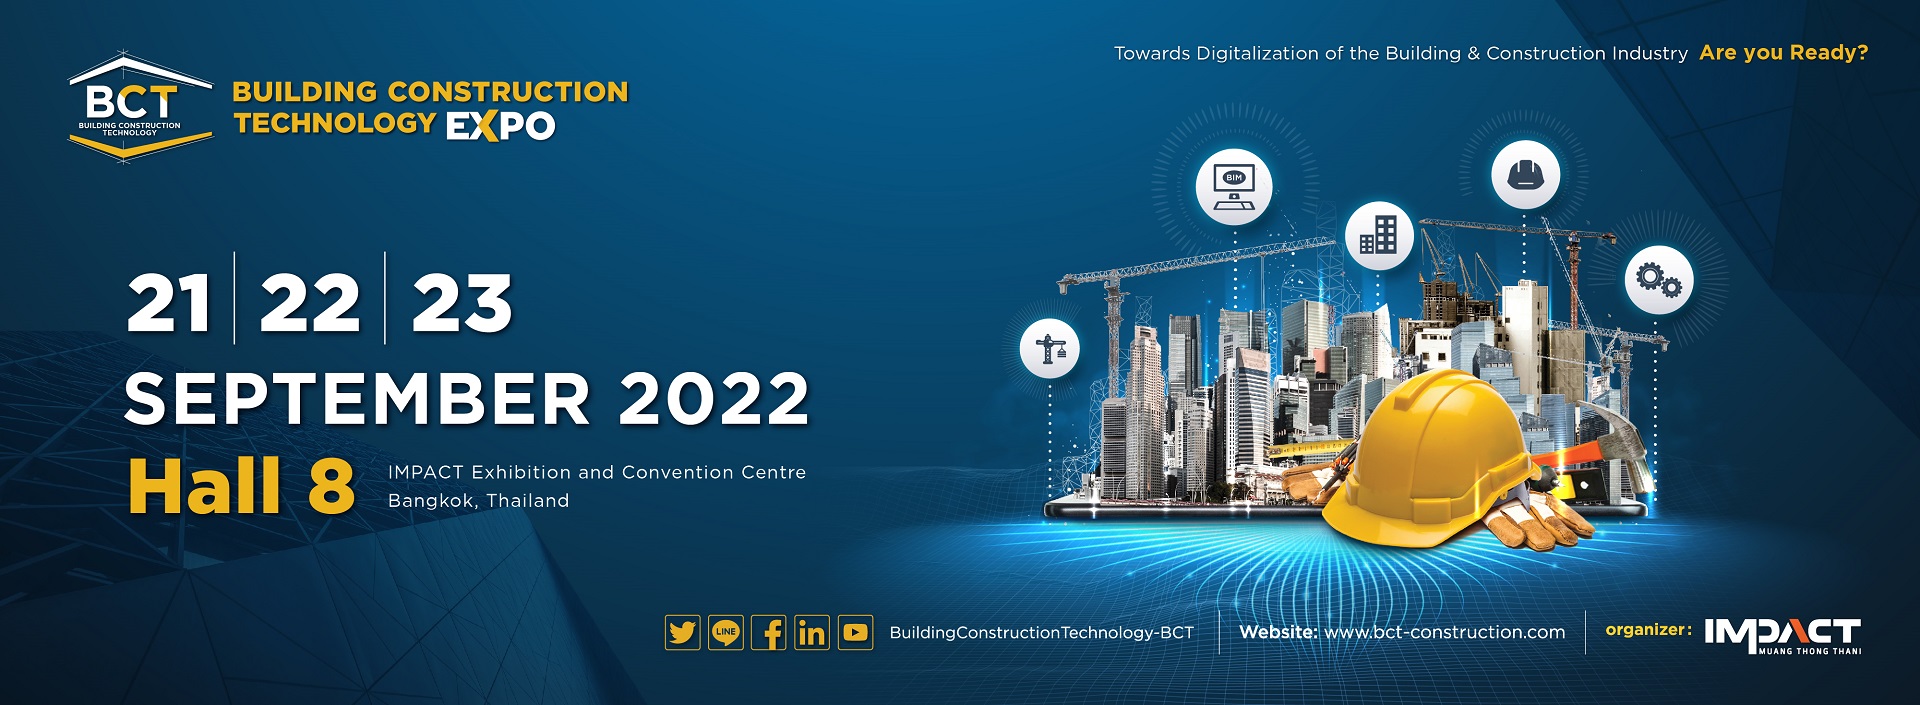 BCT Expo 2022